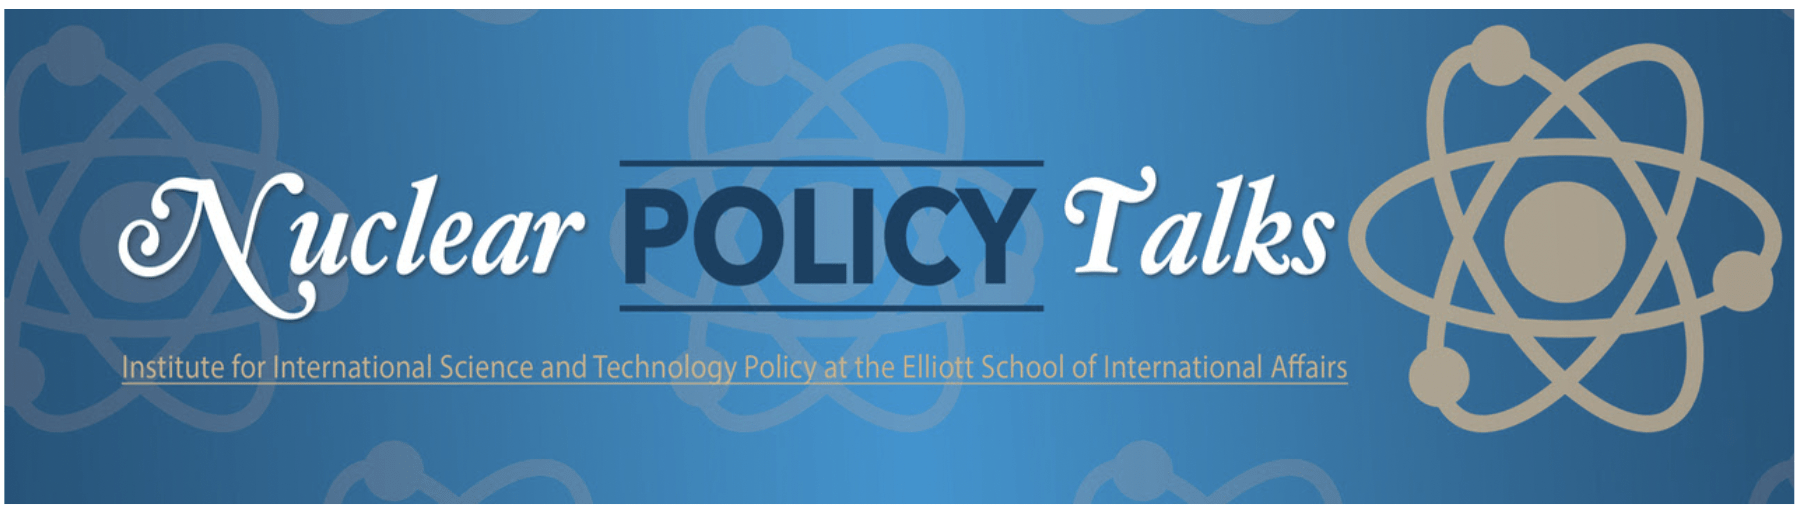 Nuclear Policy Talks Logo